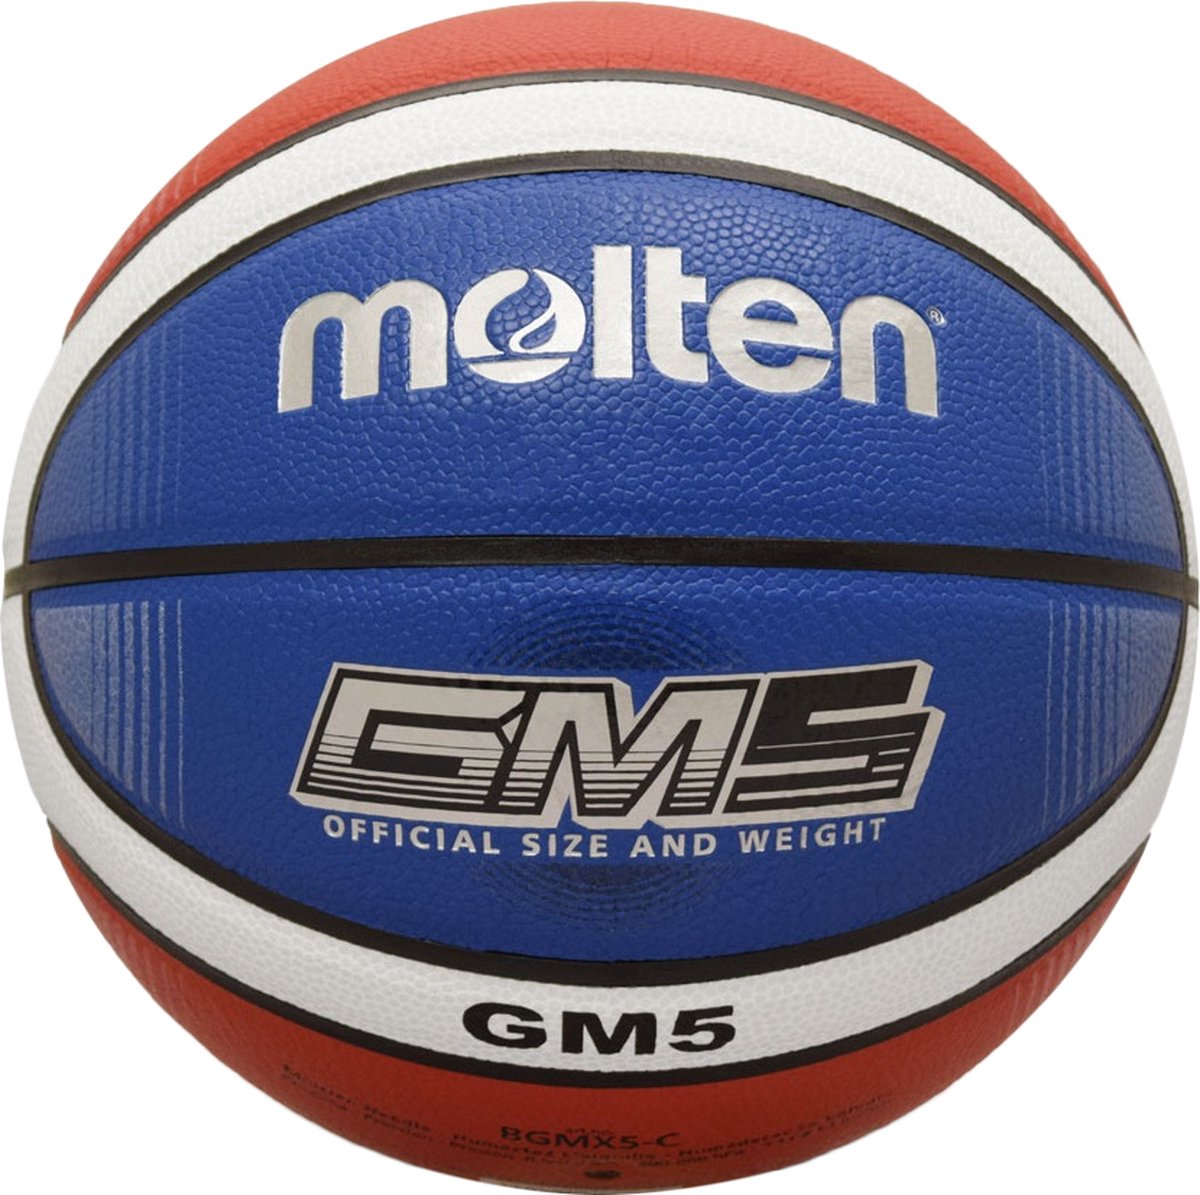 Molten Basketbal BGMX5-C